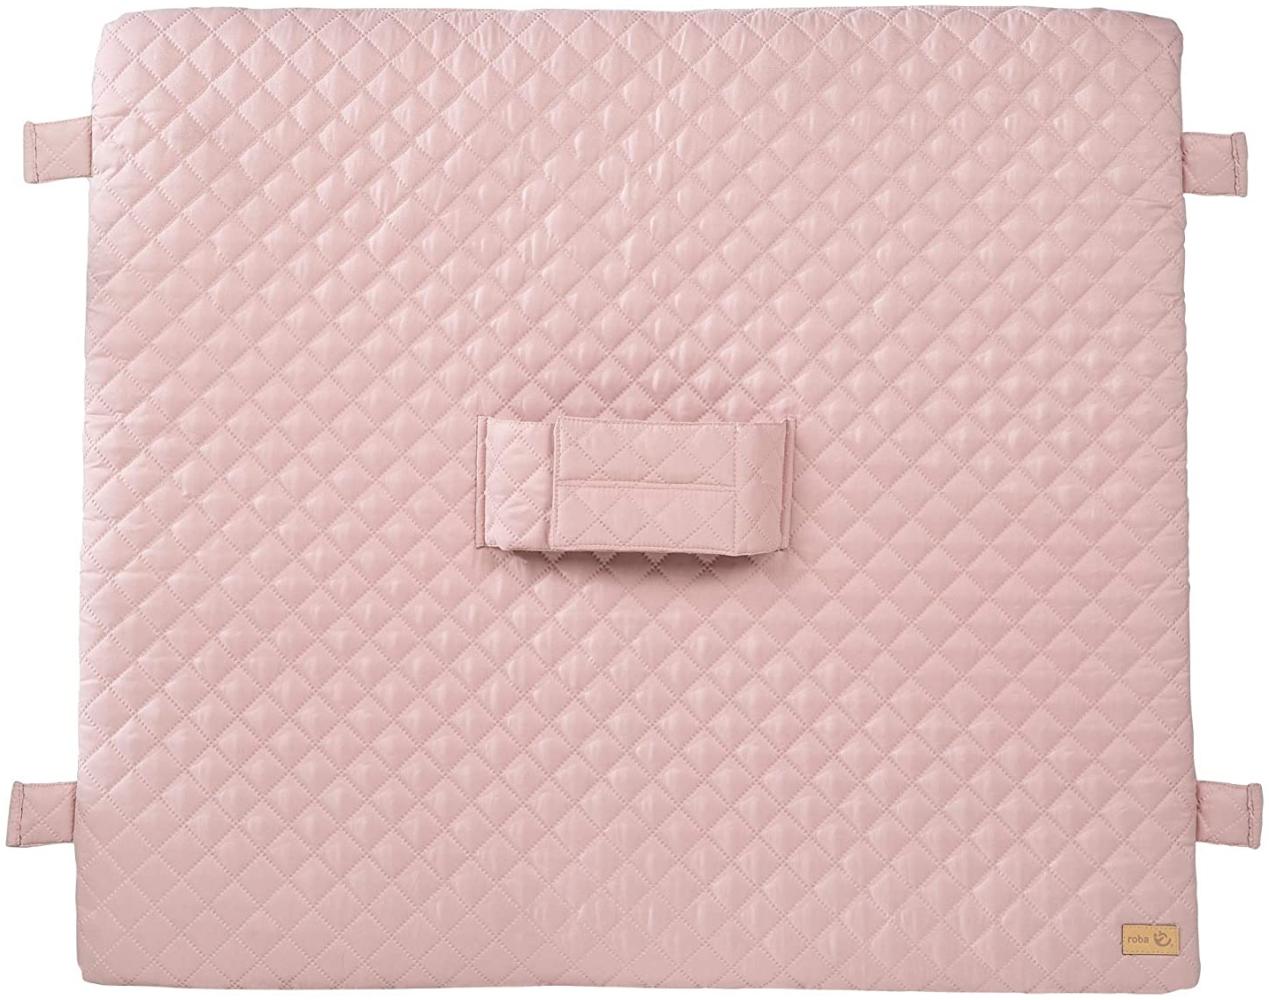 Roba 'Style' Sicherheitswickelauflage, 75 x 85 cm rosa Bild 1